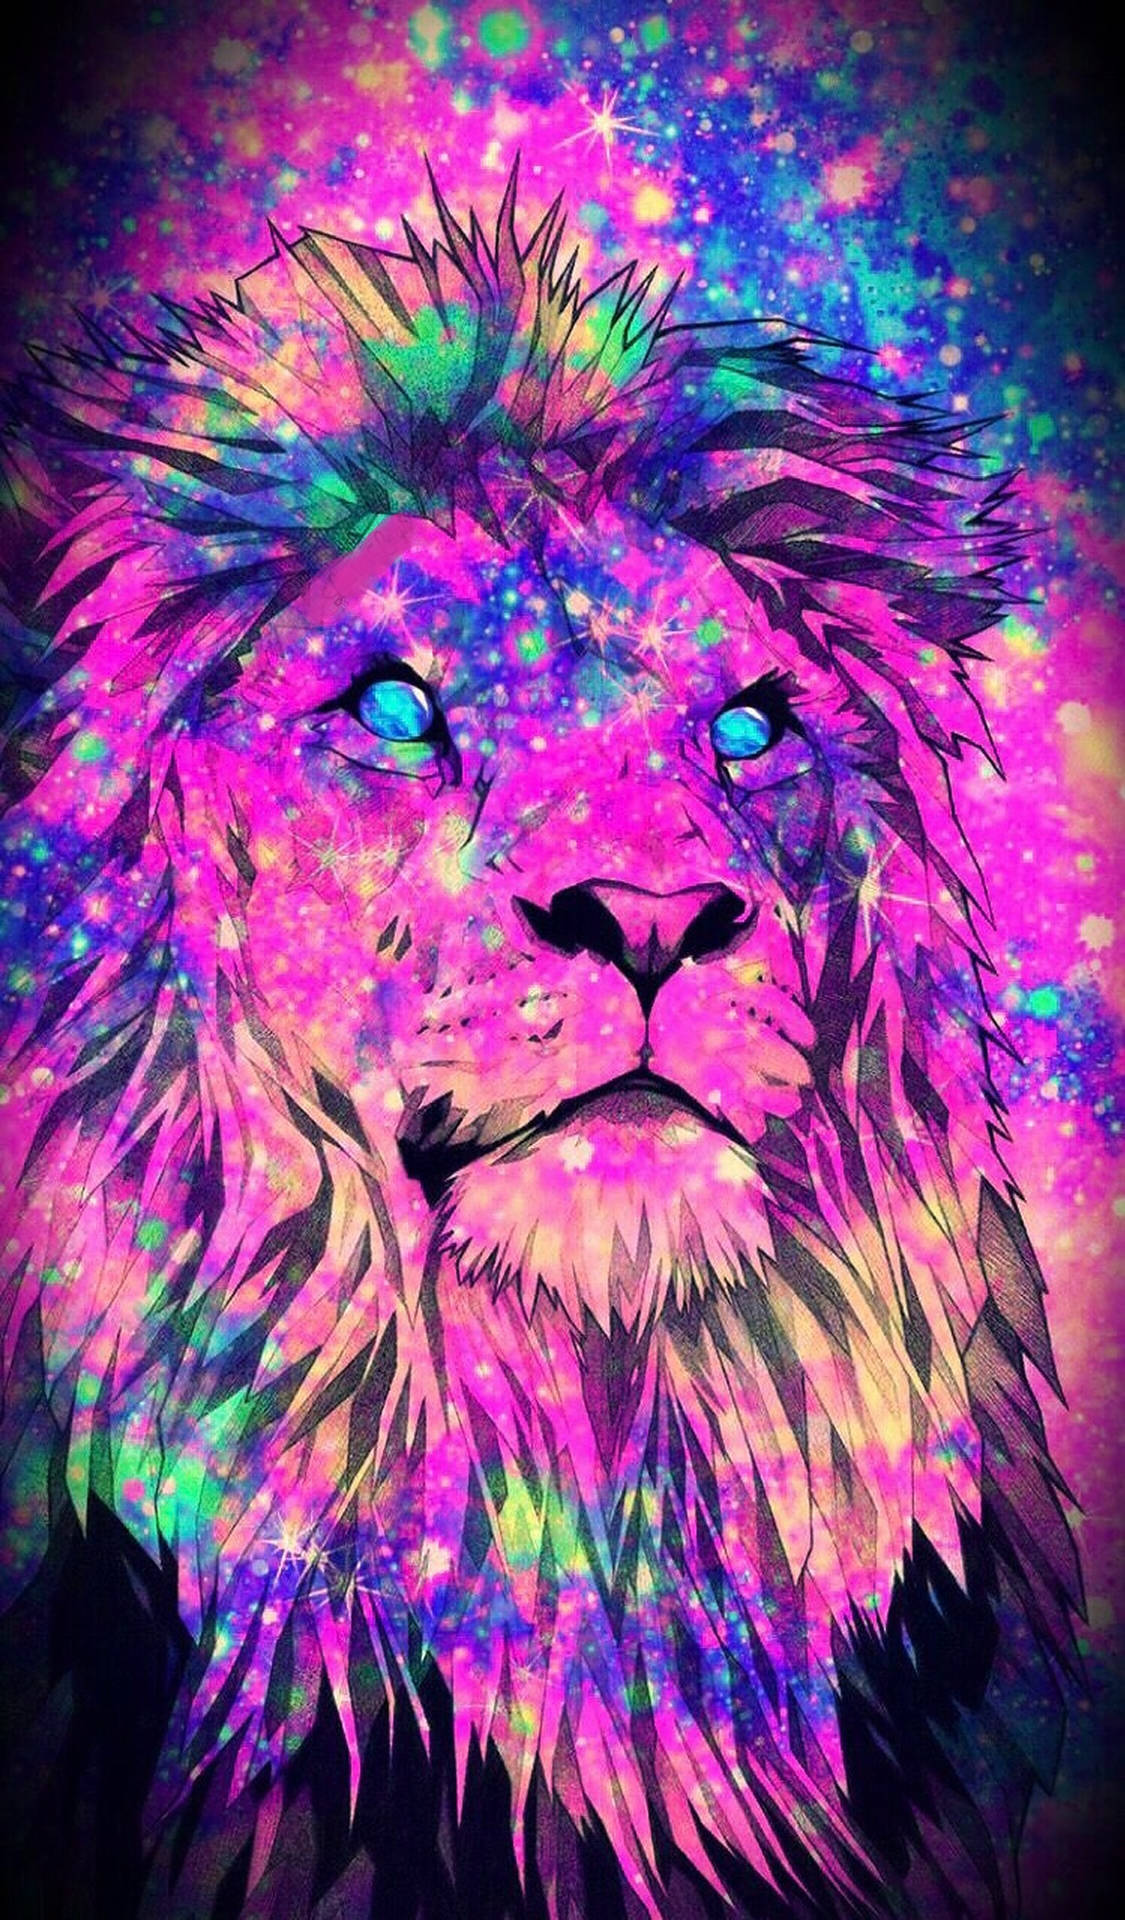 "Majestic Lion in the Cosmic Wilderness" Wallpaper